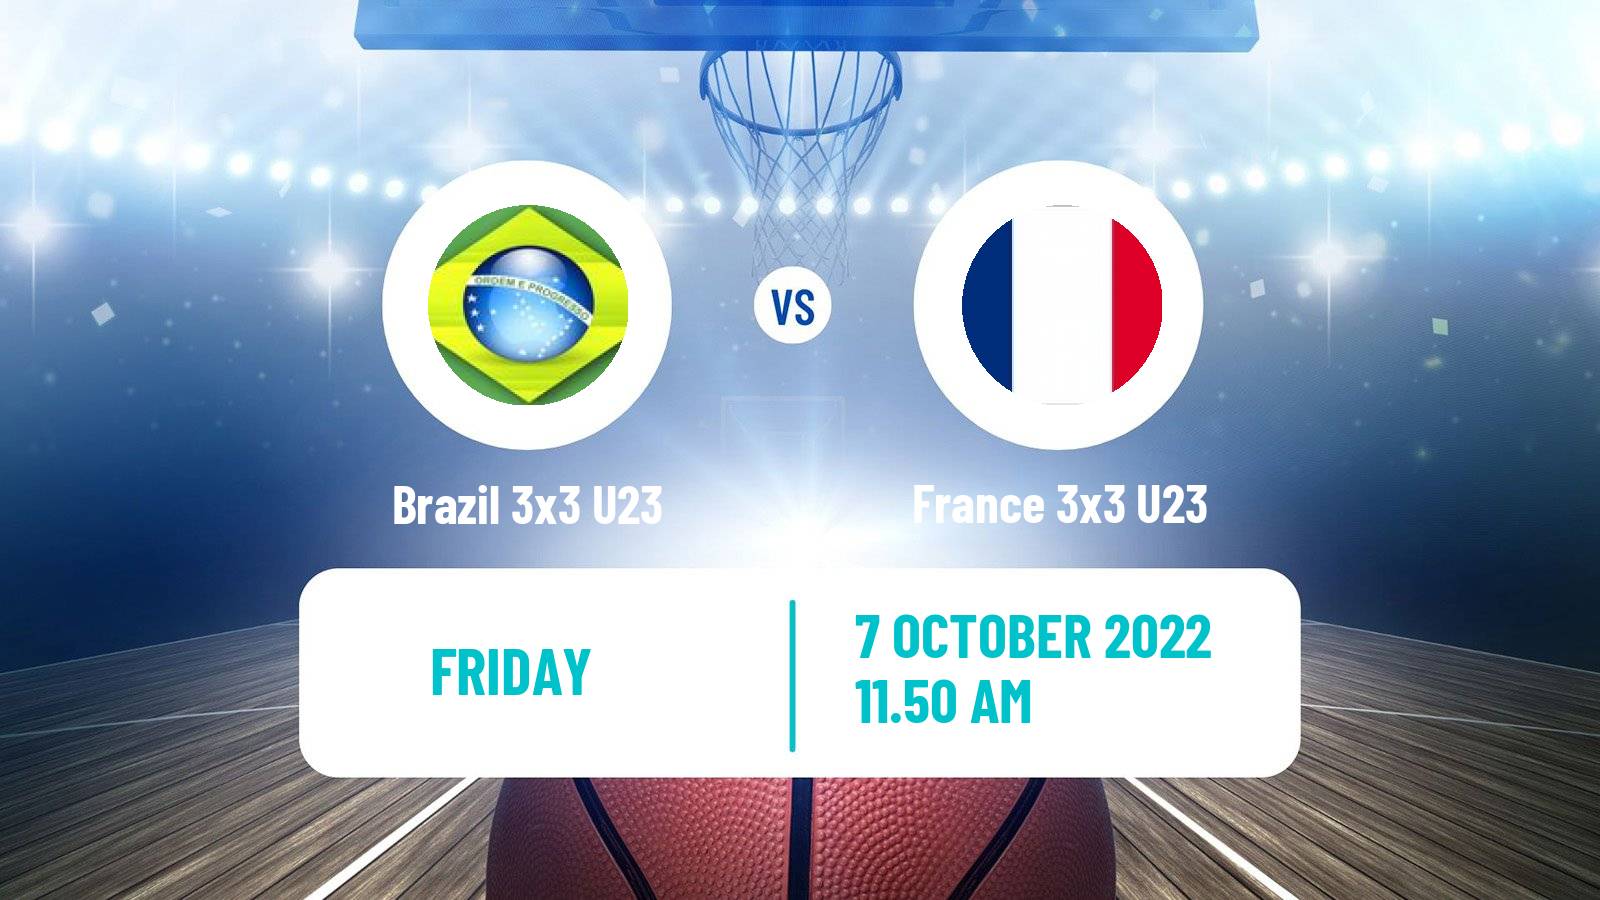 Basketball World Cup Basketball 3x3 U23 Brazil 3x3 U23 - France 3x3 U23